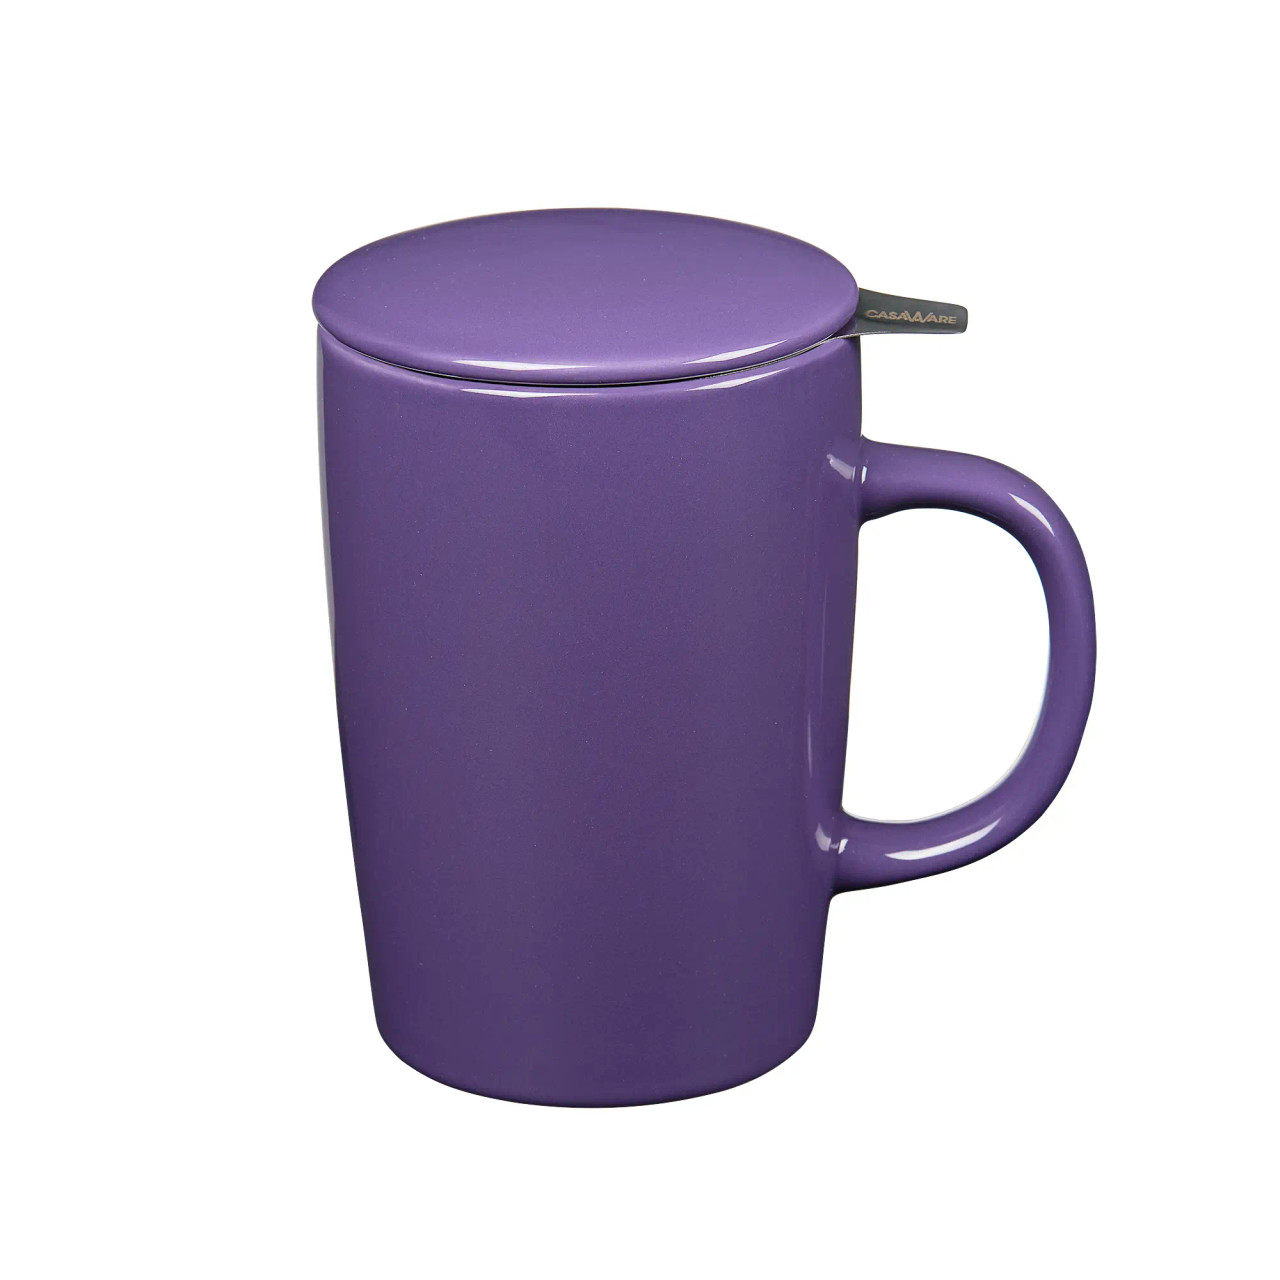 New Leaf Tall Tea Mug w/ Infuser (16 oz.) More Colors